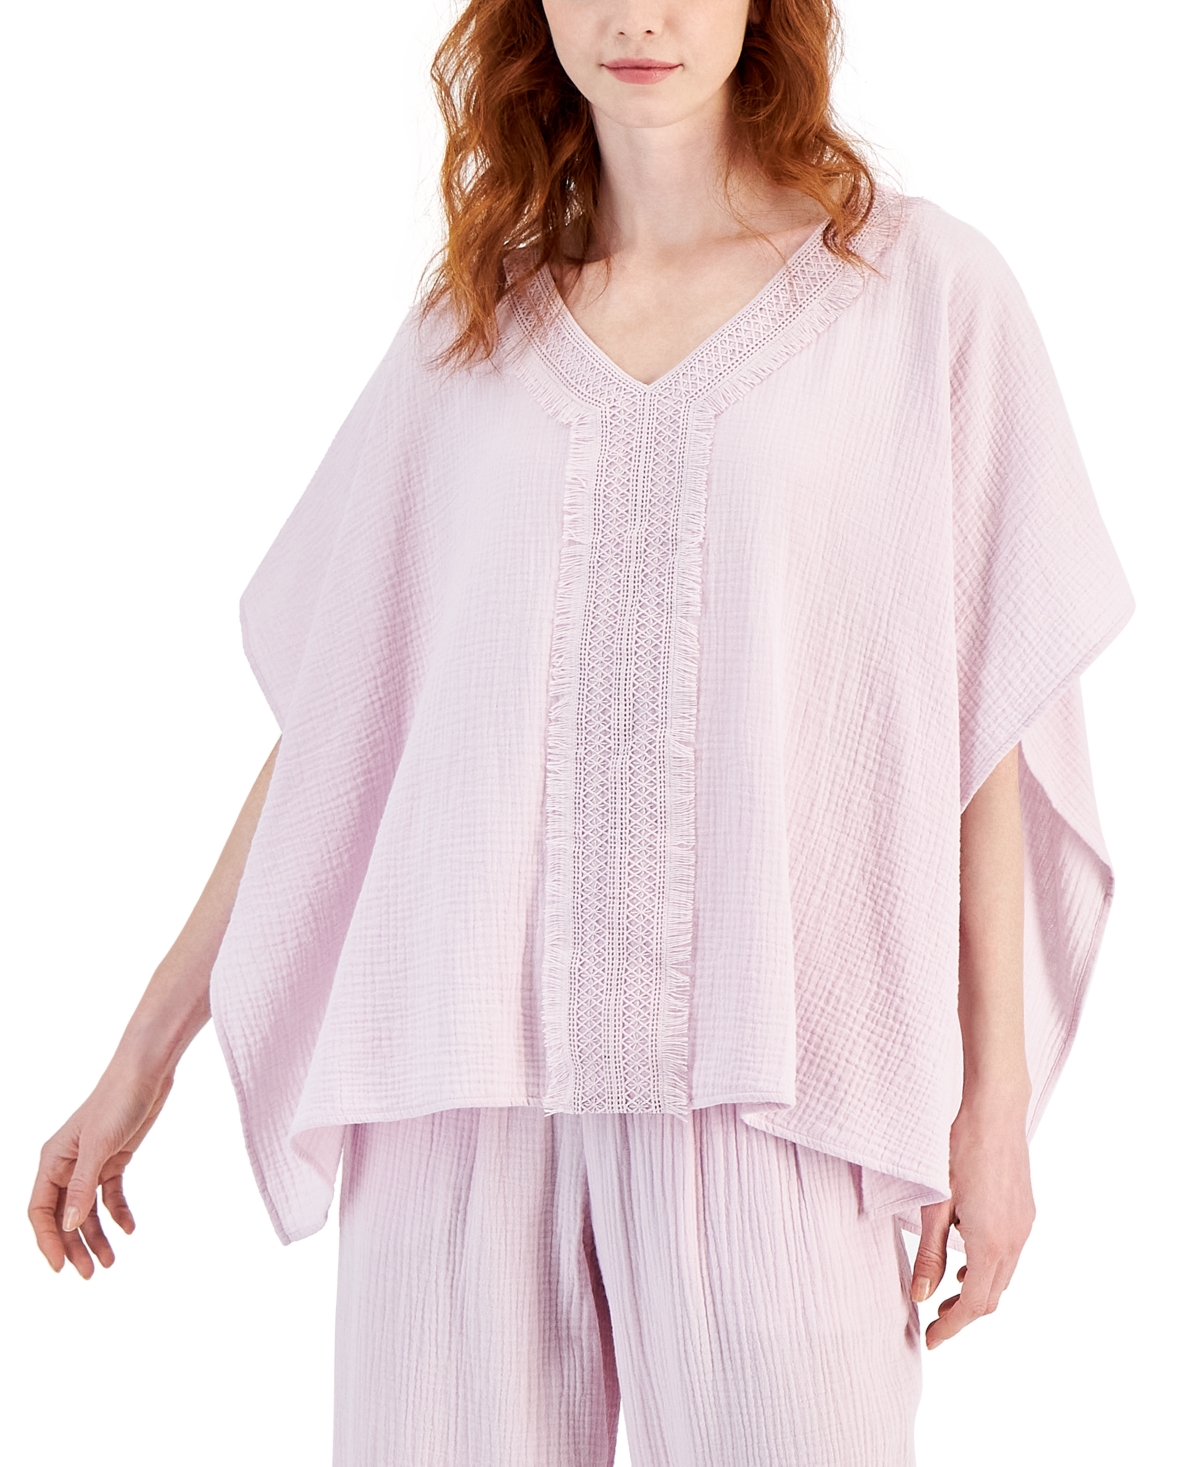 Women's Lace-Trim V-Neck Gauze Poncho Top, Created for Macy's - Lilac Sky